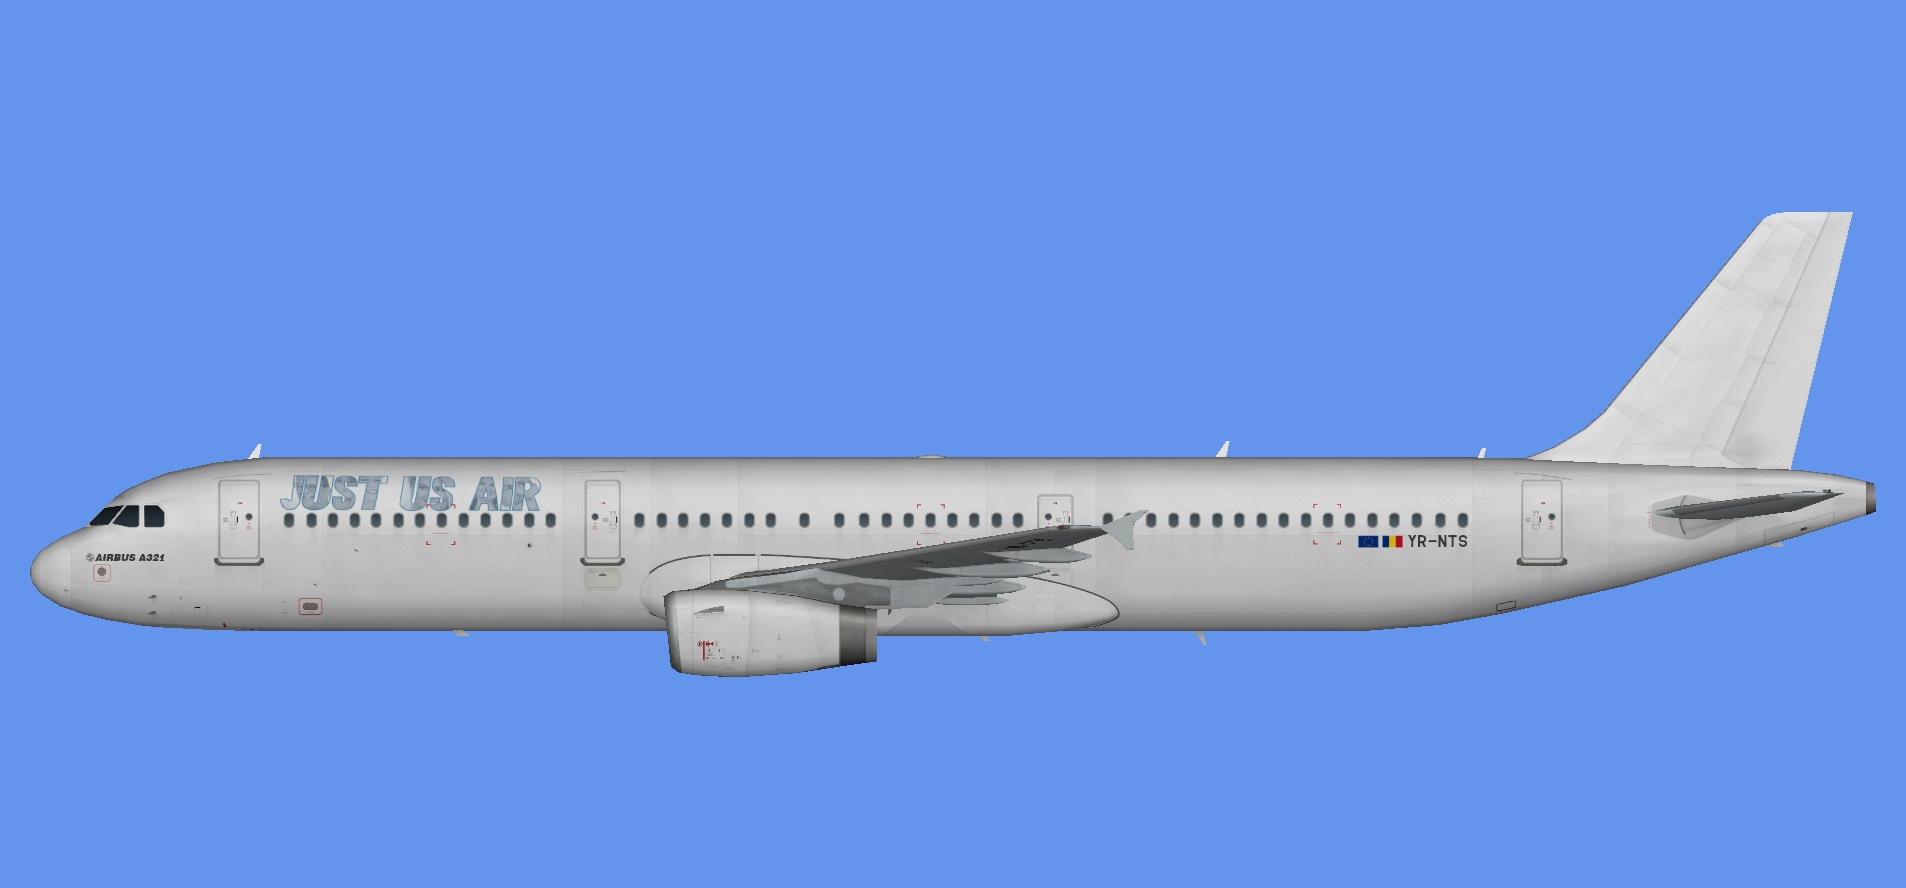 Just-Us Air Airbus A321